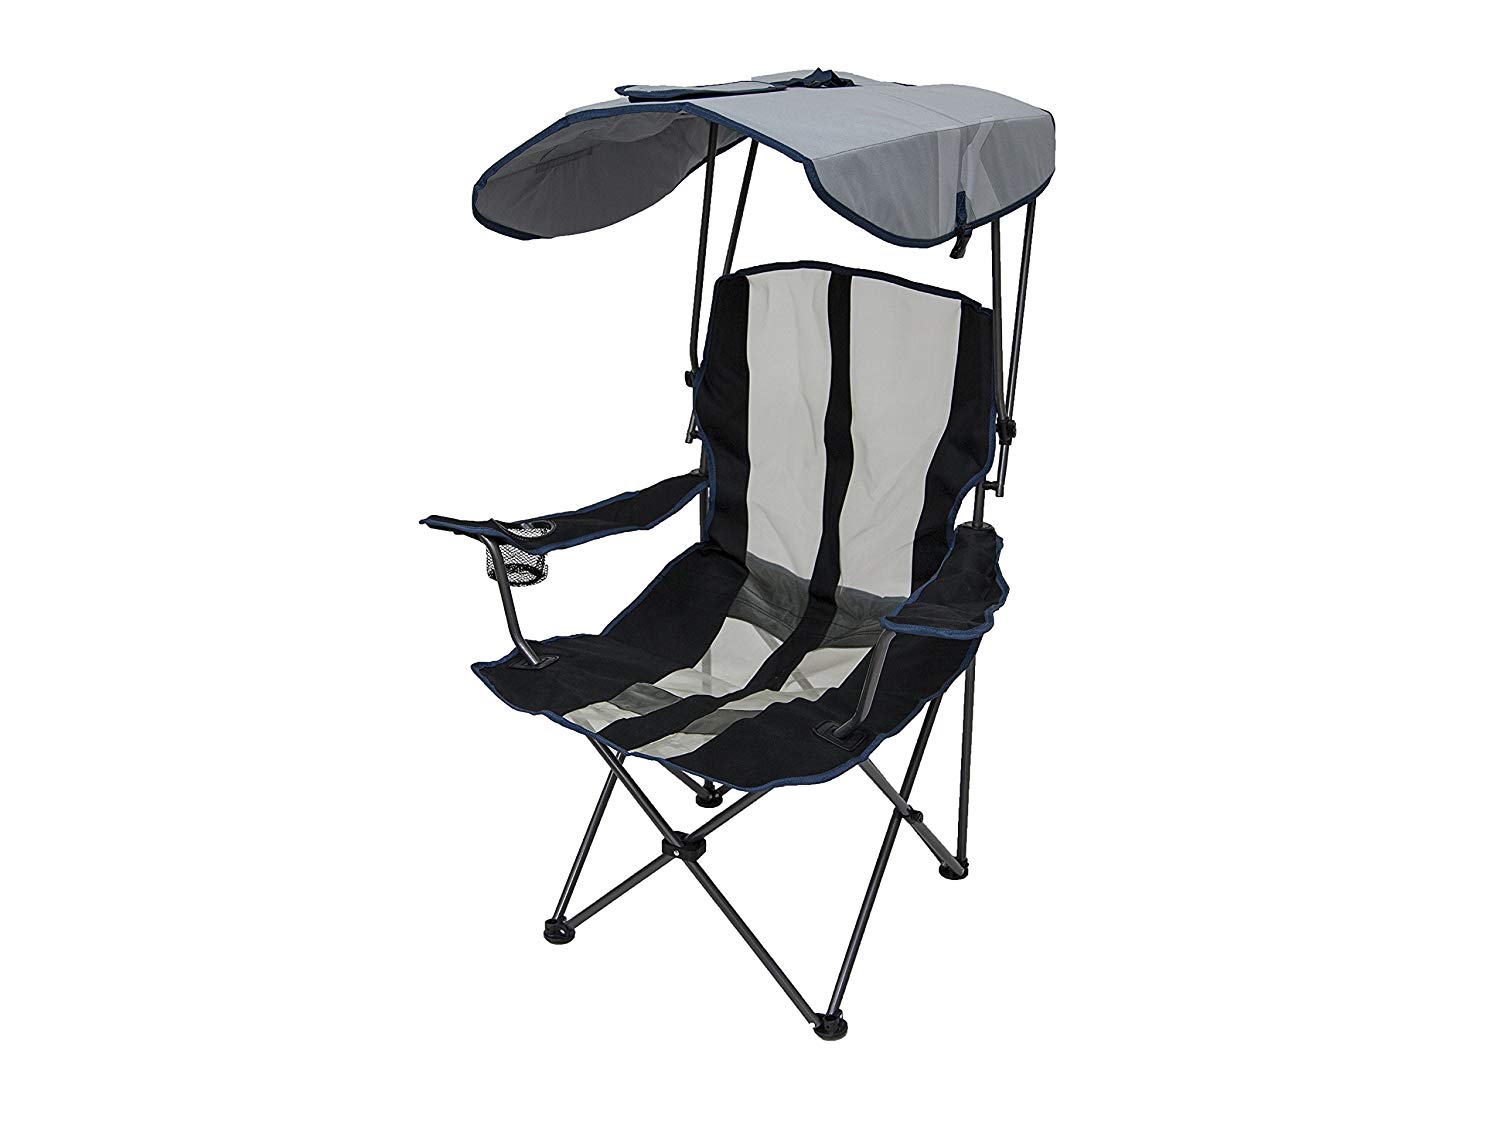 SwimWays Kelsyus Original Canopy Chair Linked to Amazon